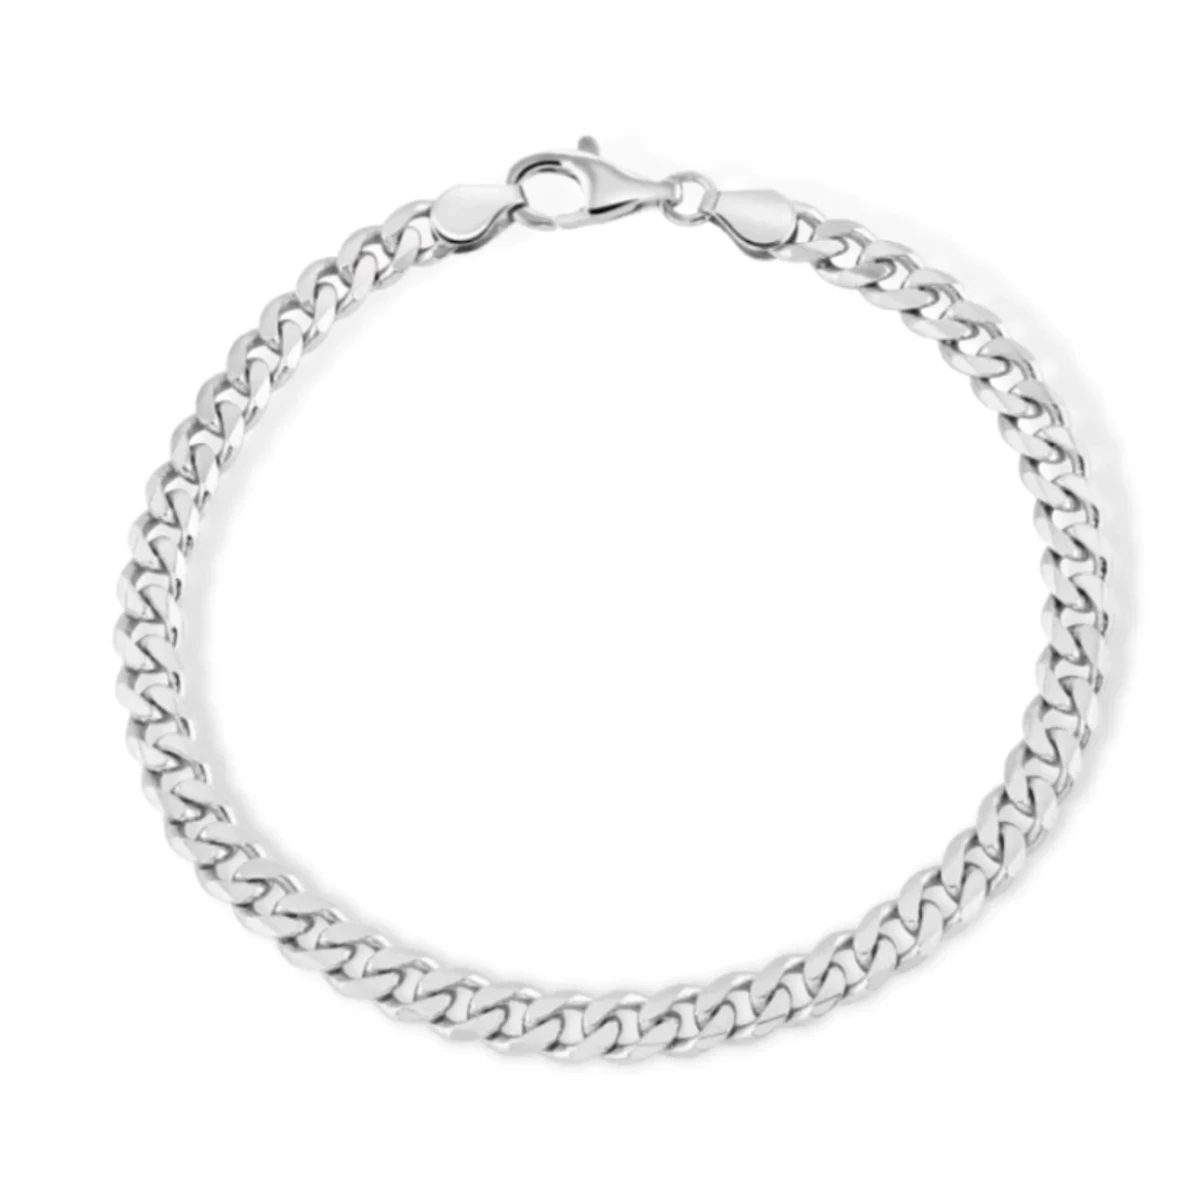 Silver Stainless Steel Chain Bracelets For Men